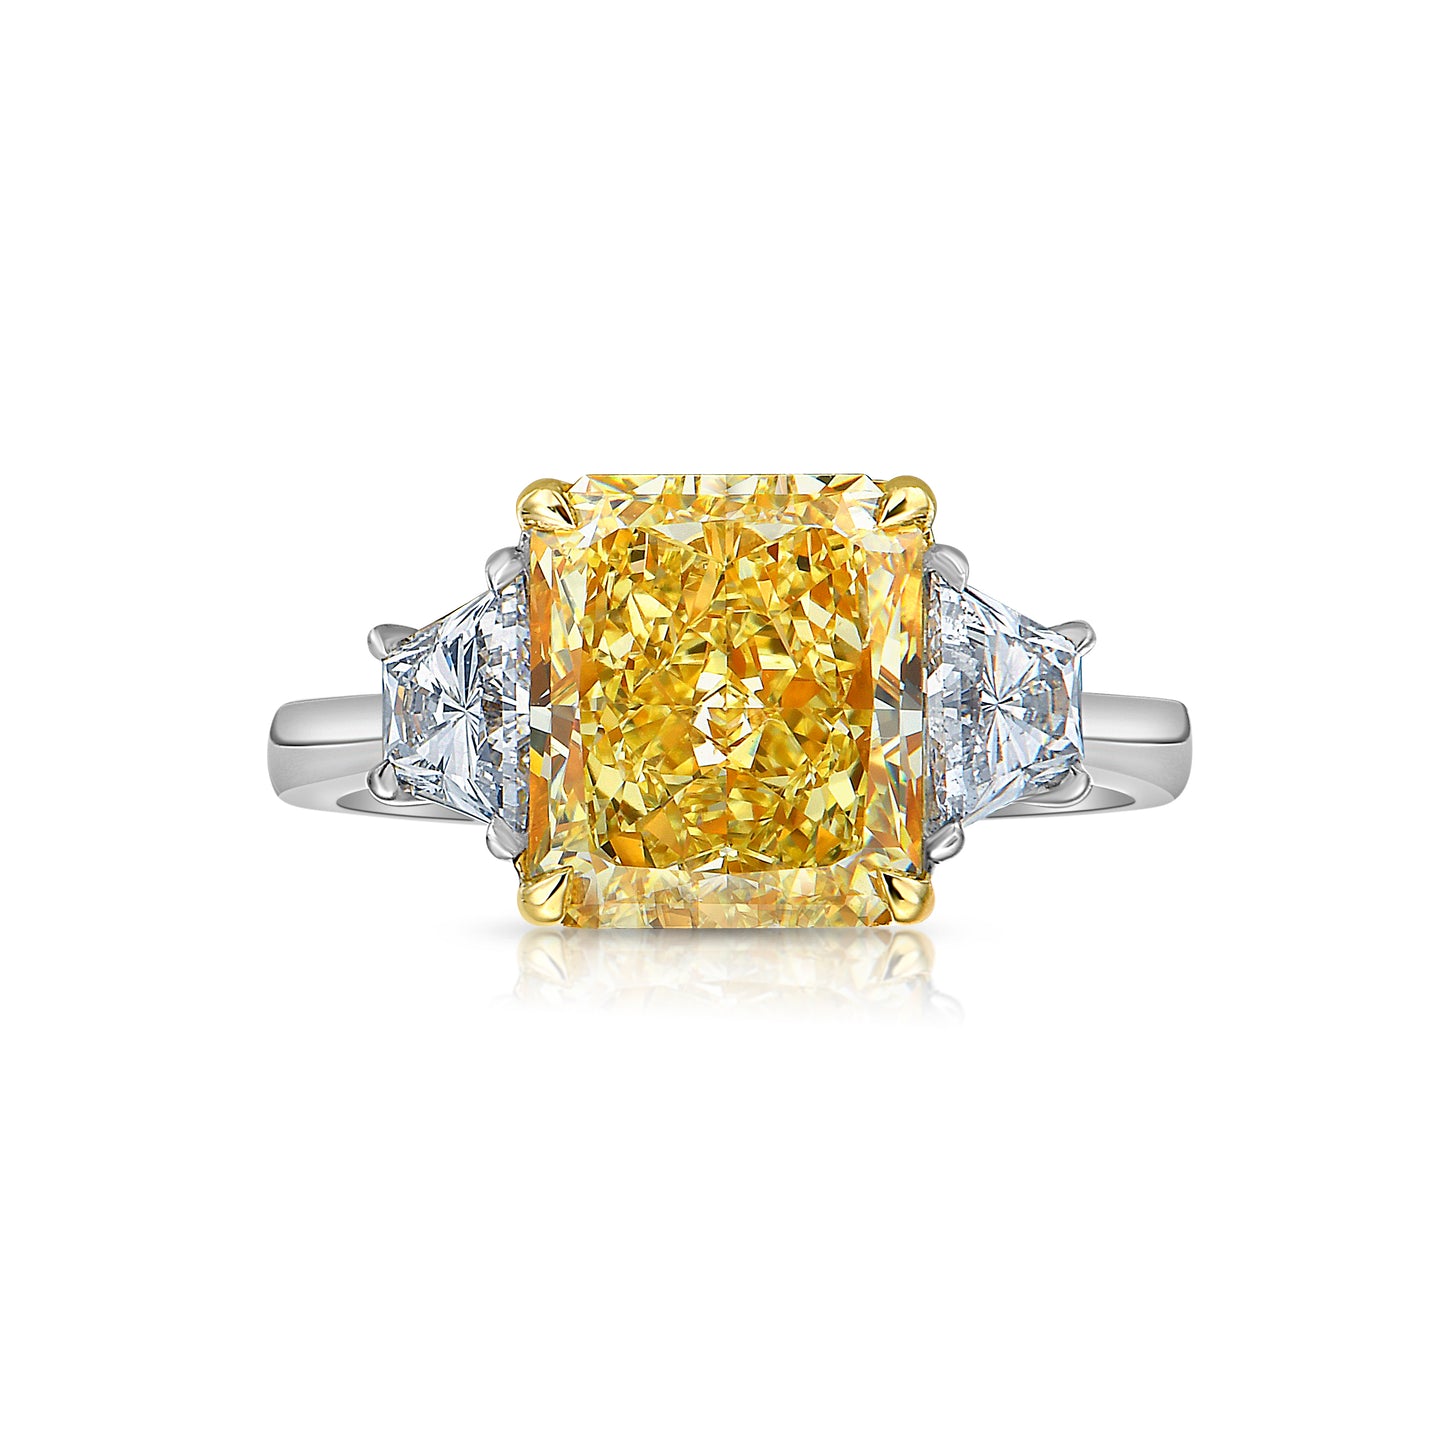 4 carat fancy yellow radiant set in 3 stone platinum ring